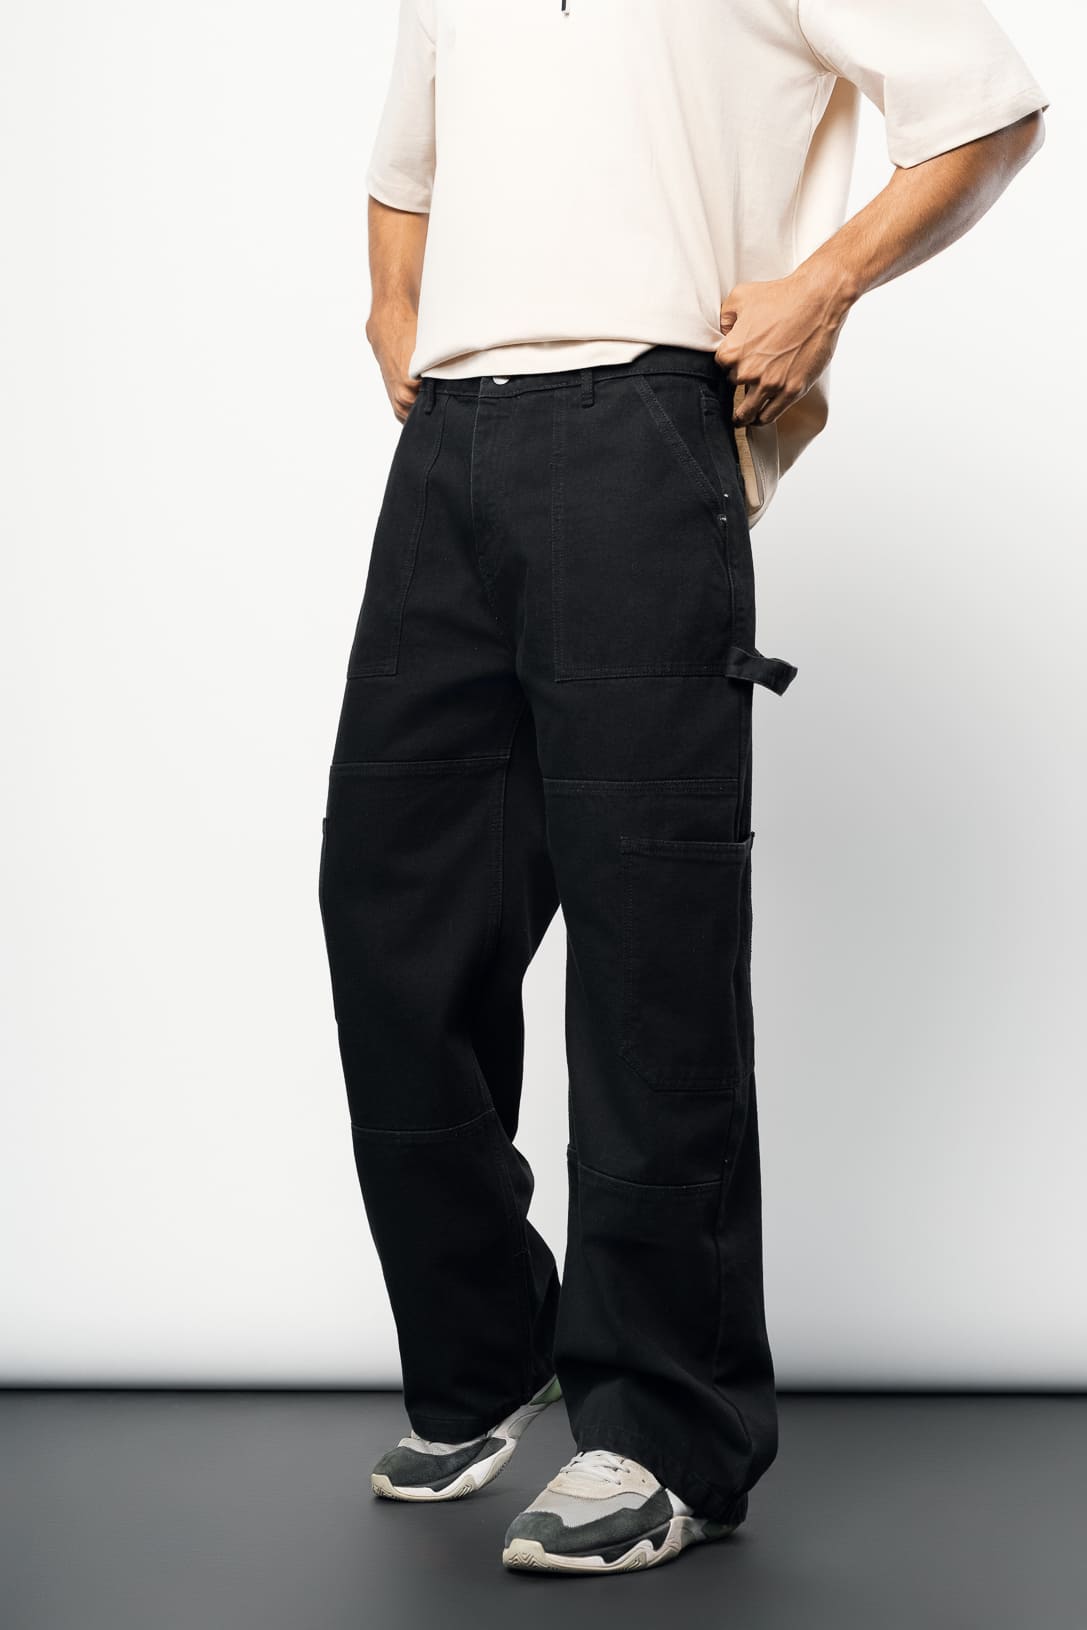 Turtle Bay New York Men's Casual Elastic Waist Denim Pull on Jeans Pants –  TURTLE BAY APPAREL